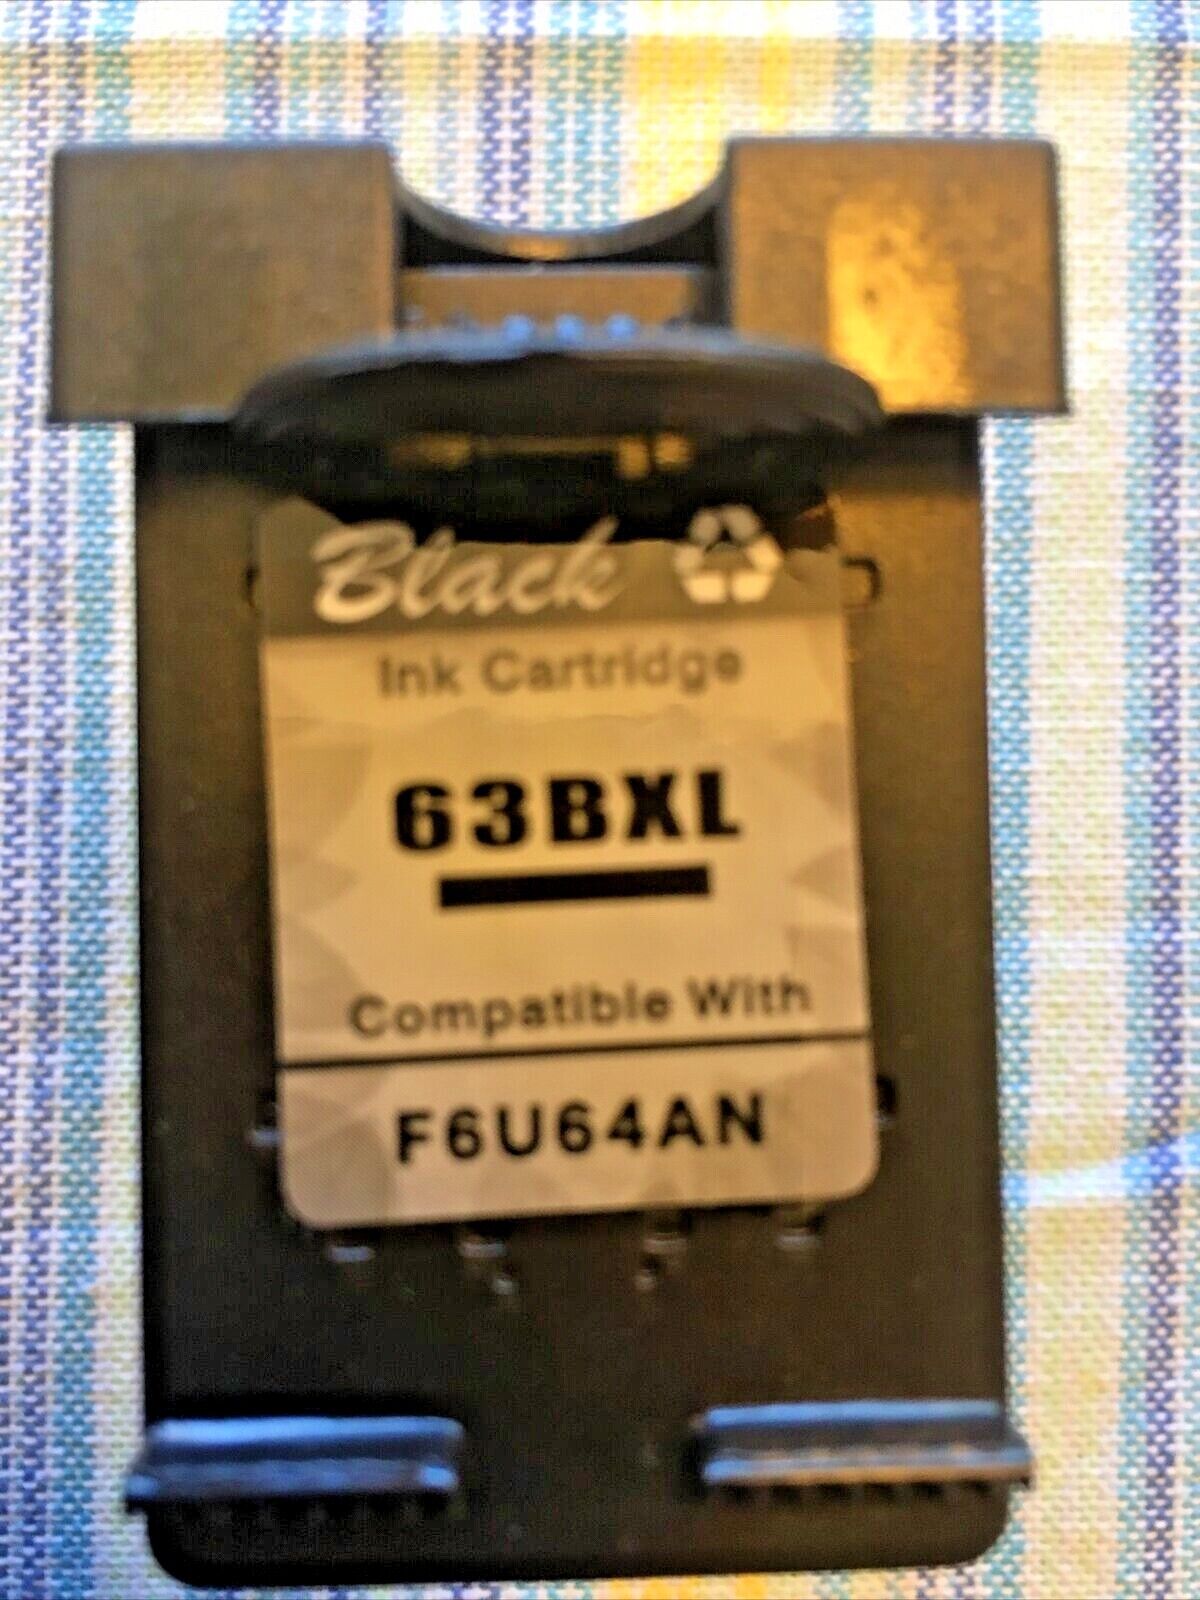 Black Ink 63xl Cartridge Empty Used